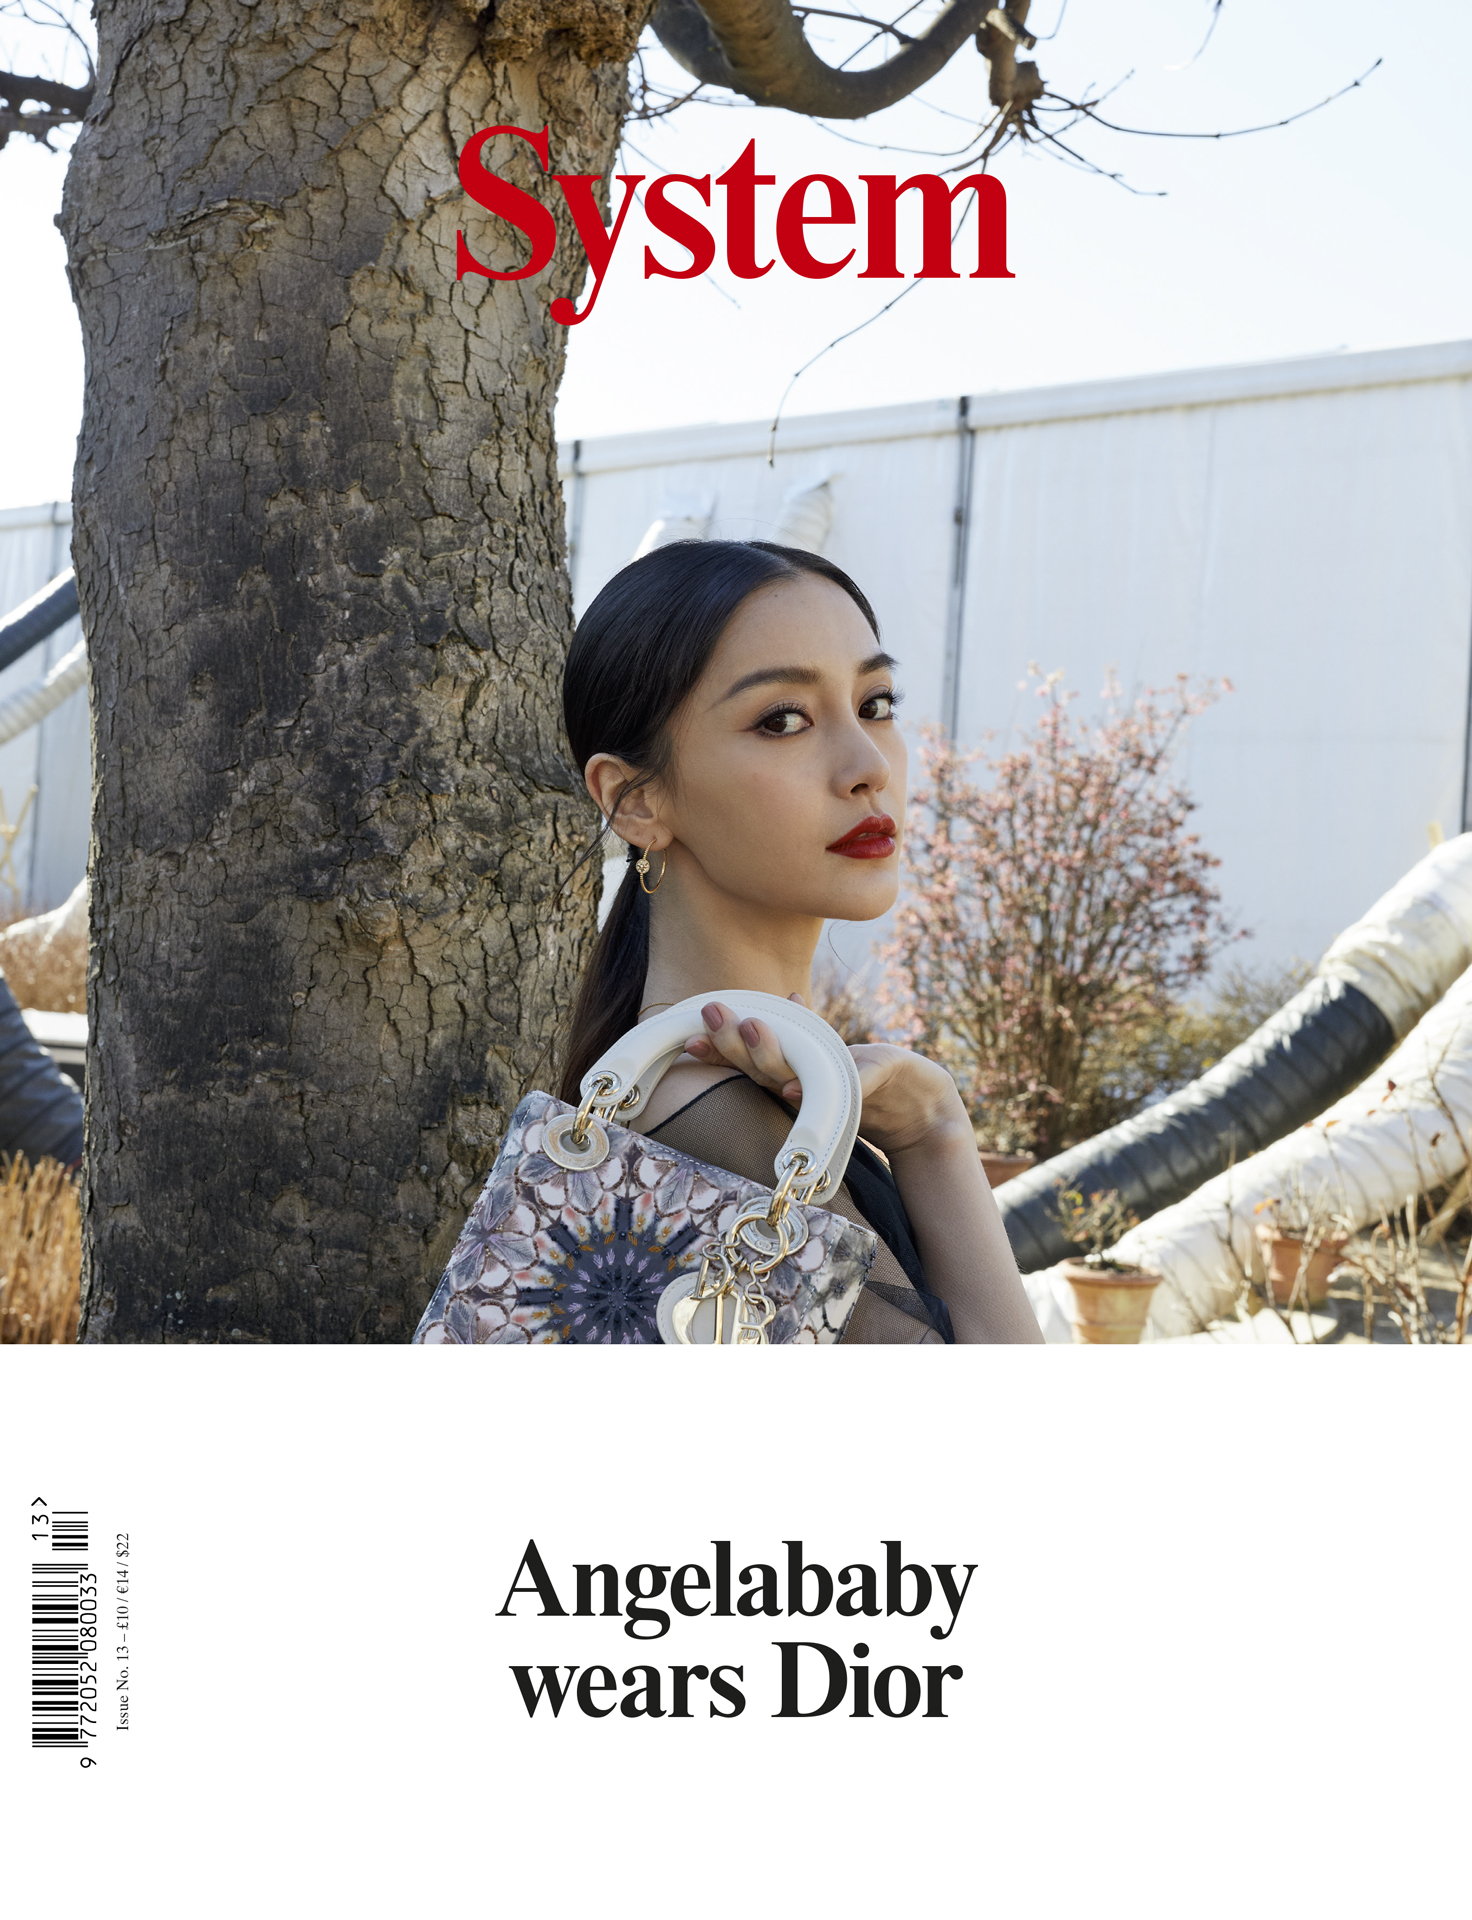 Issue 13 - System Magazine